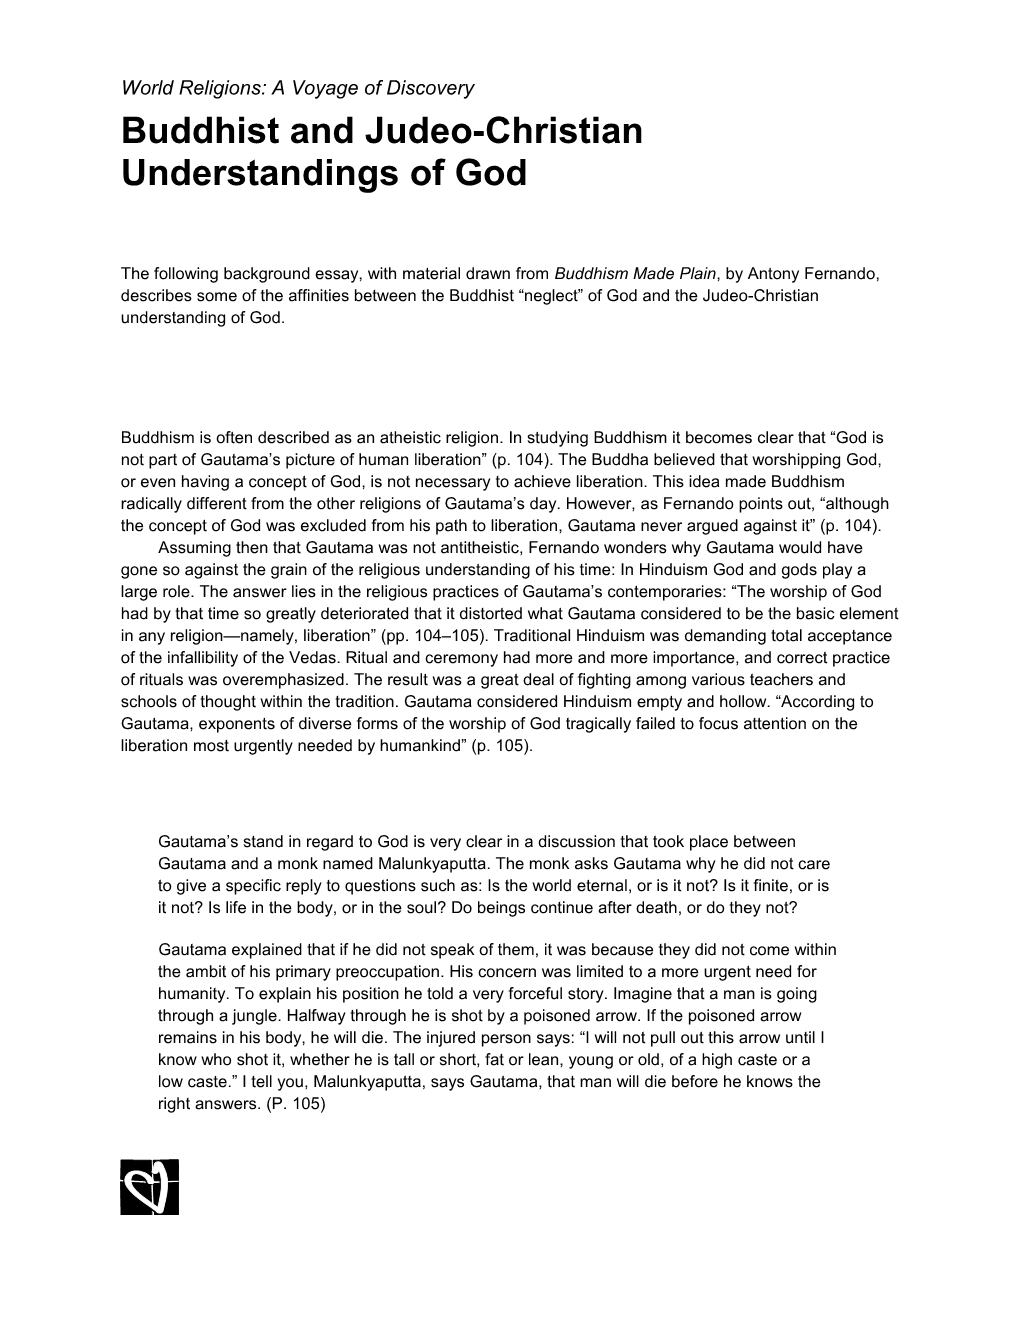 Buddhist and Judeo-Christian Understandings of God